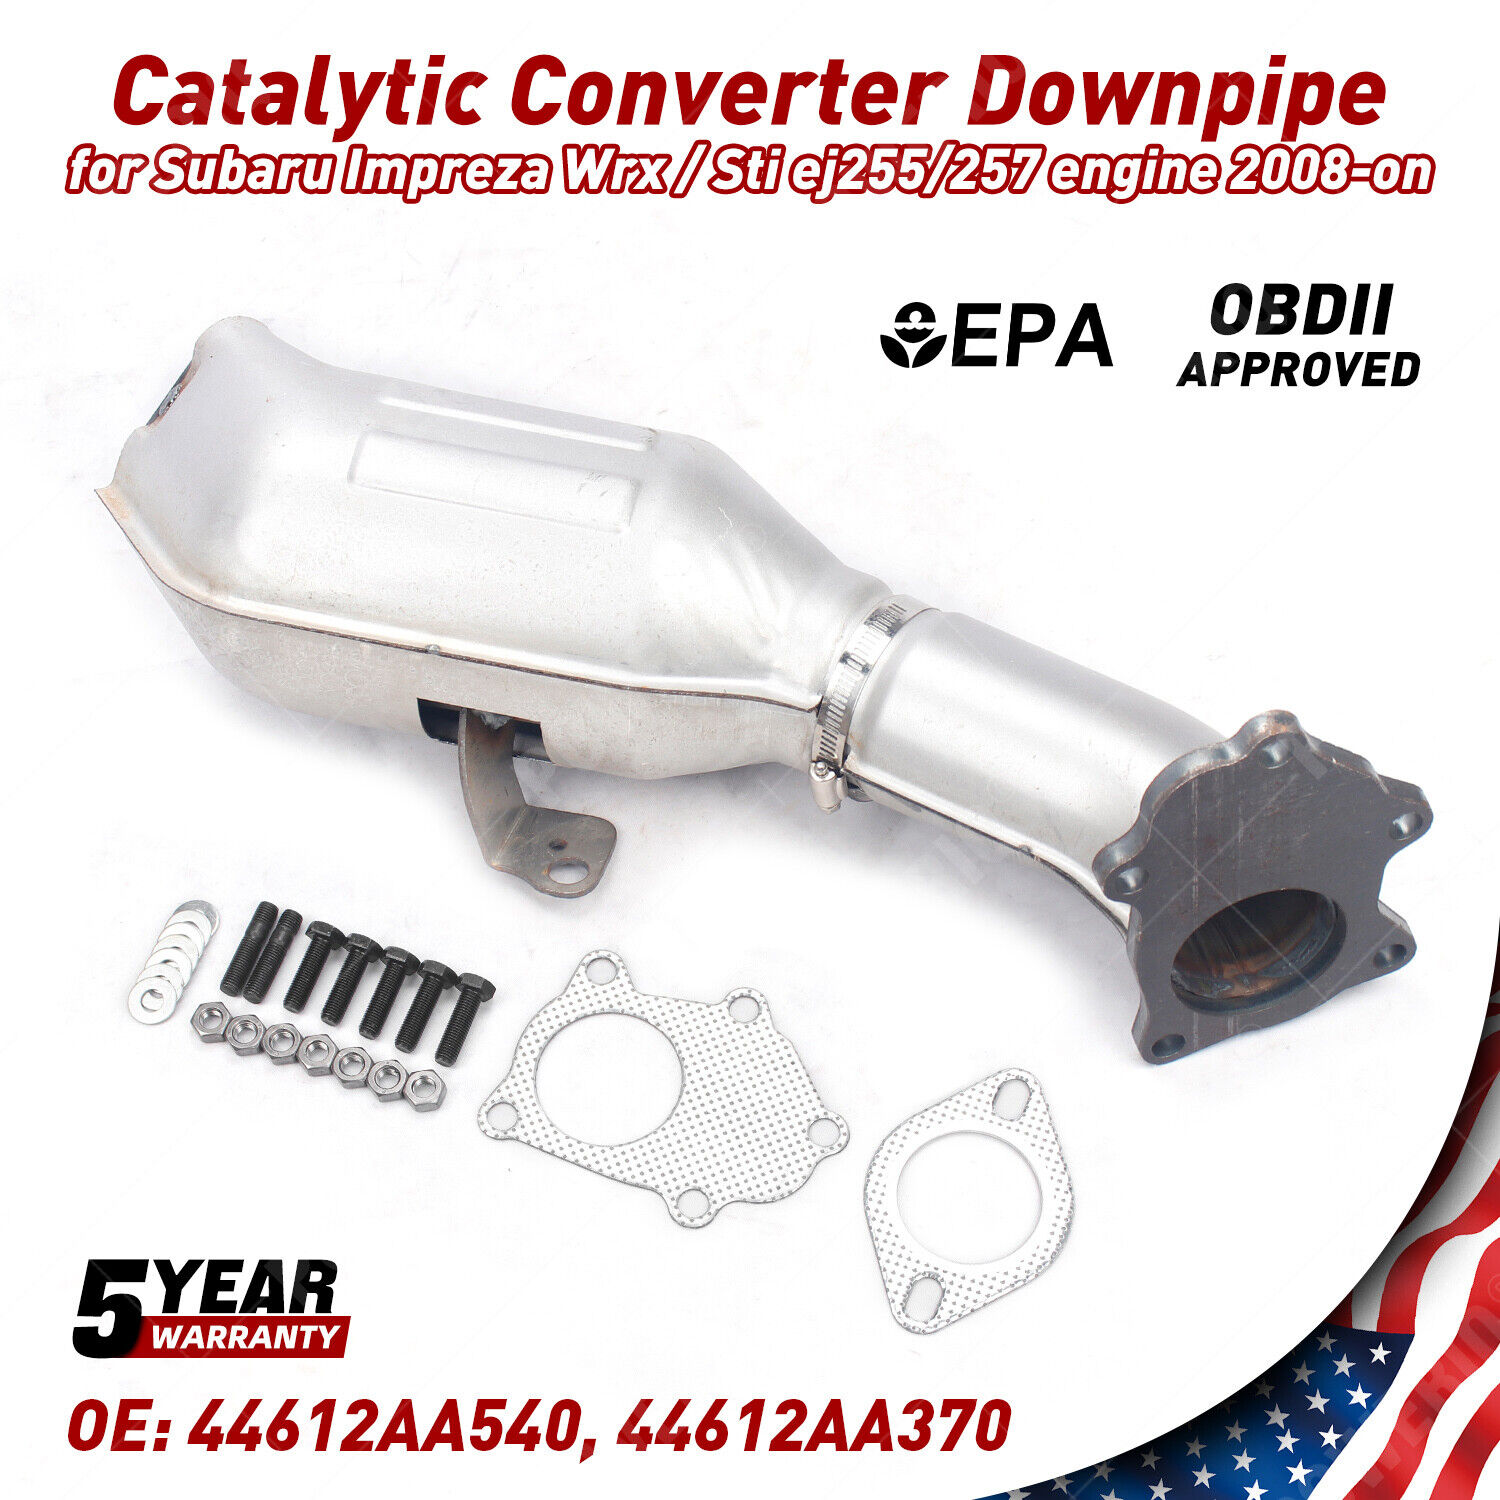 Catalytic Converter Downpipe for Subaru Impreza Wrx / Sti/Forester XT/Outback XT